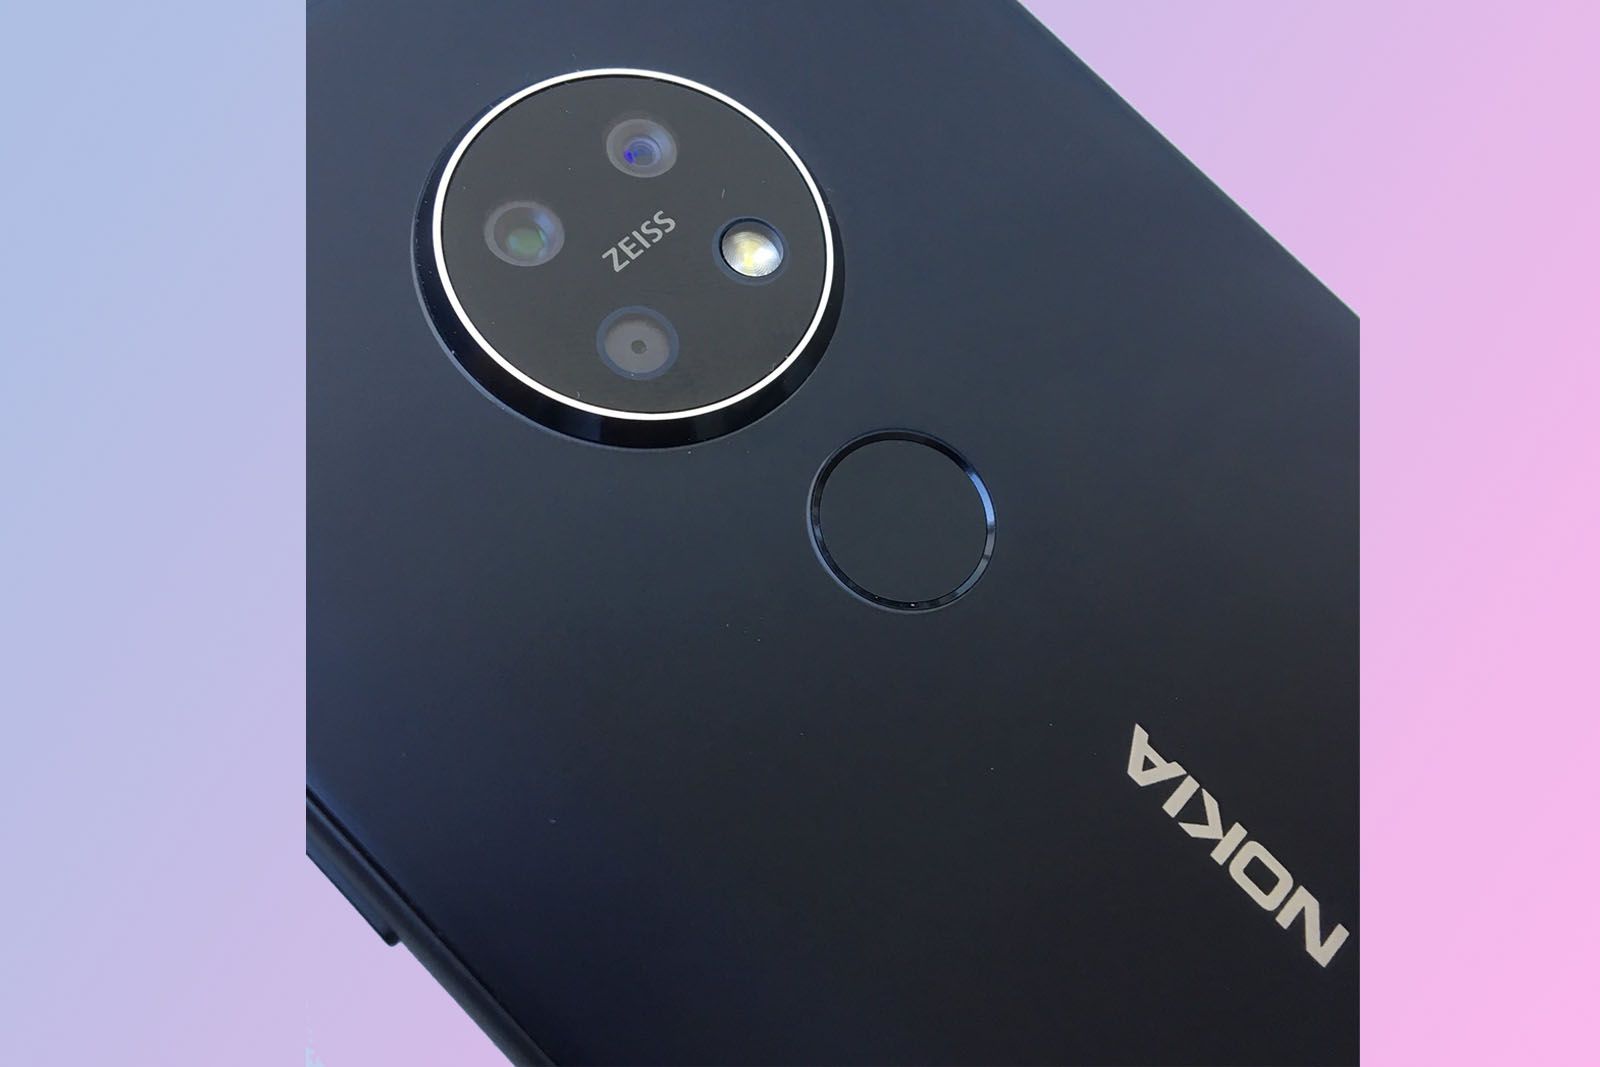 Nokia 72 accidentally revealed confirming circular rear camera design image 1